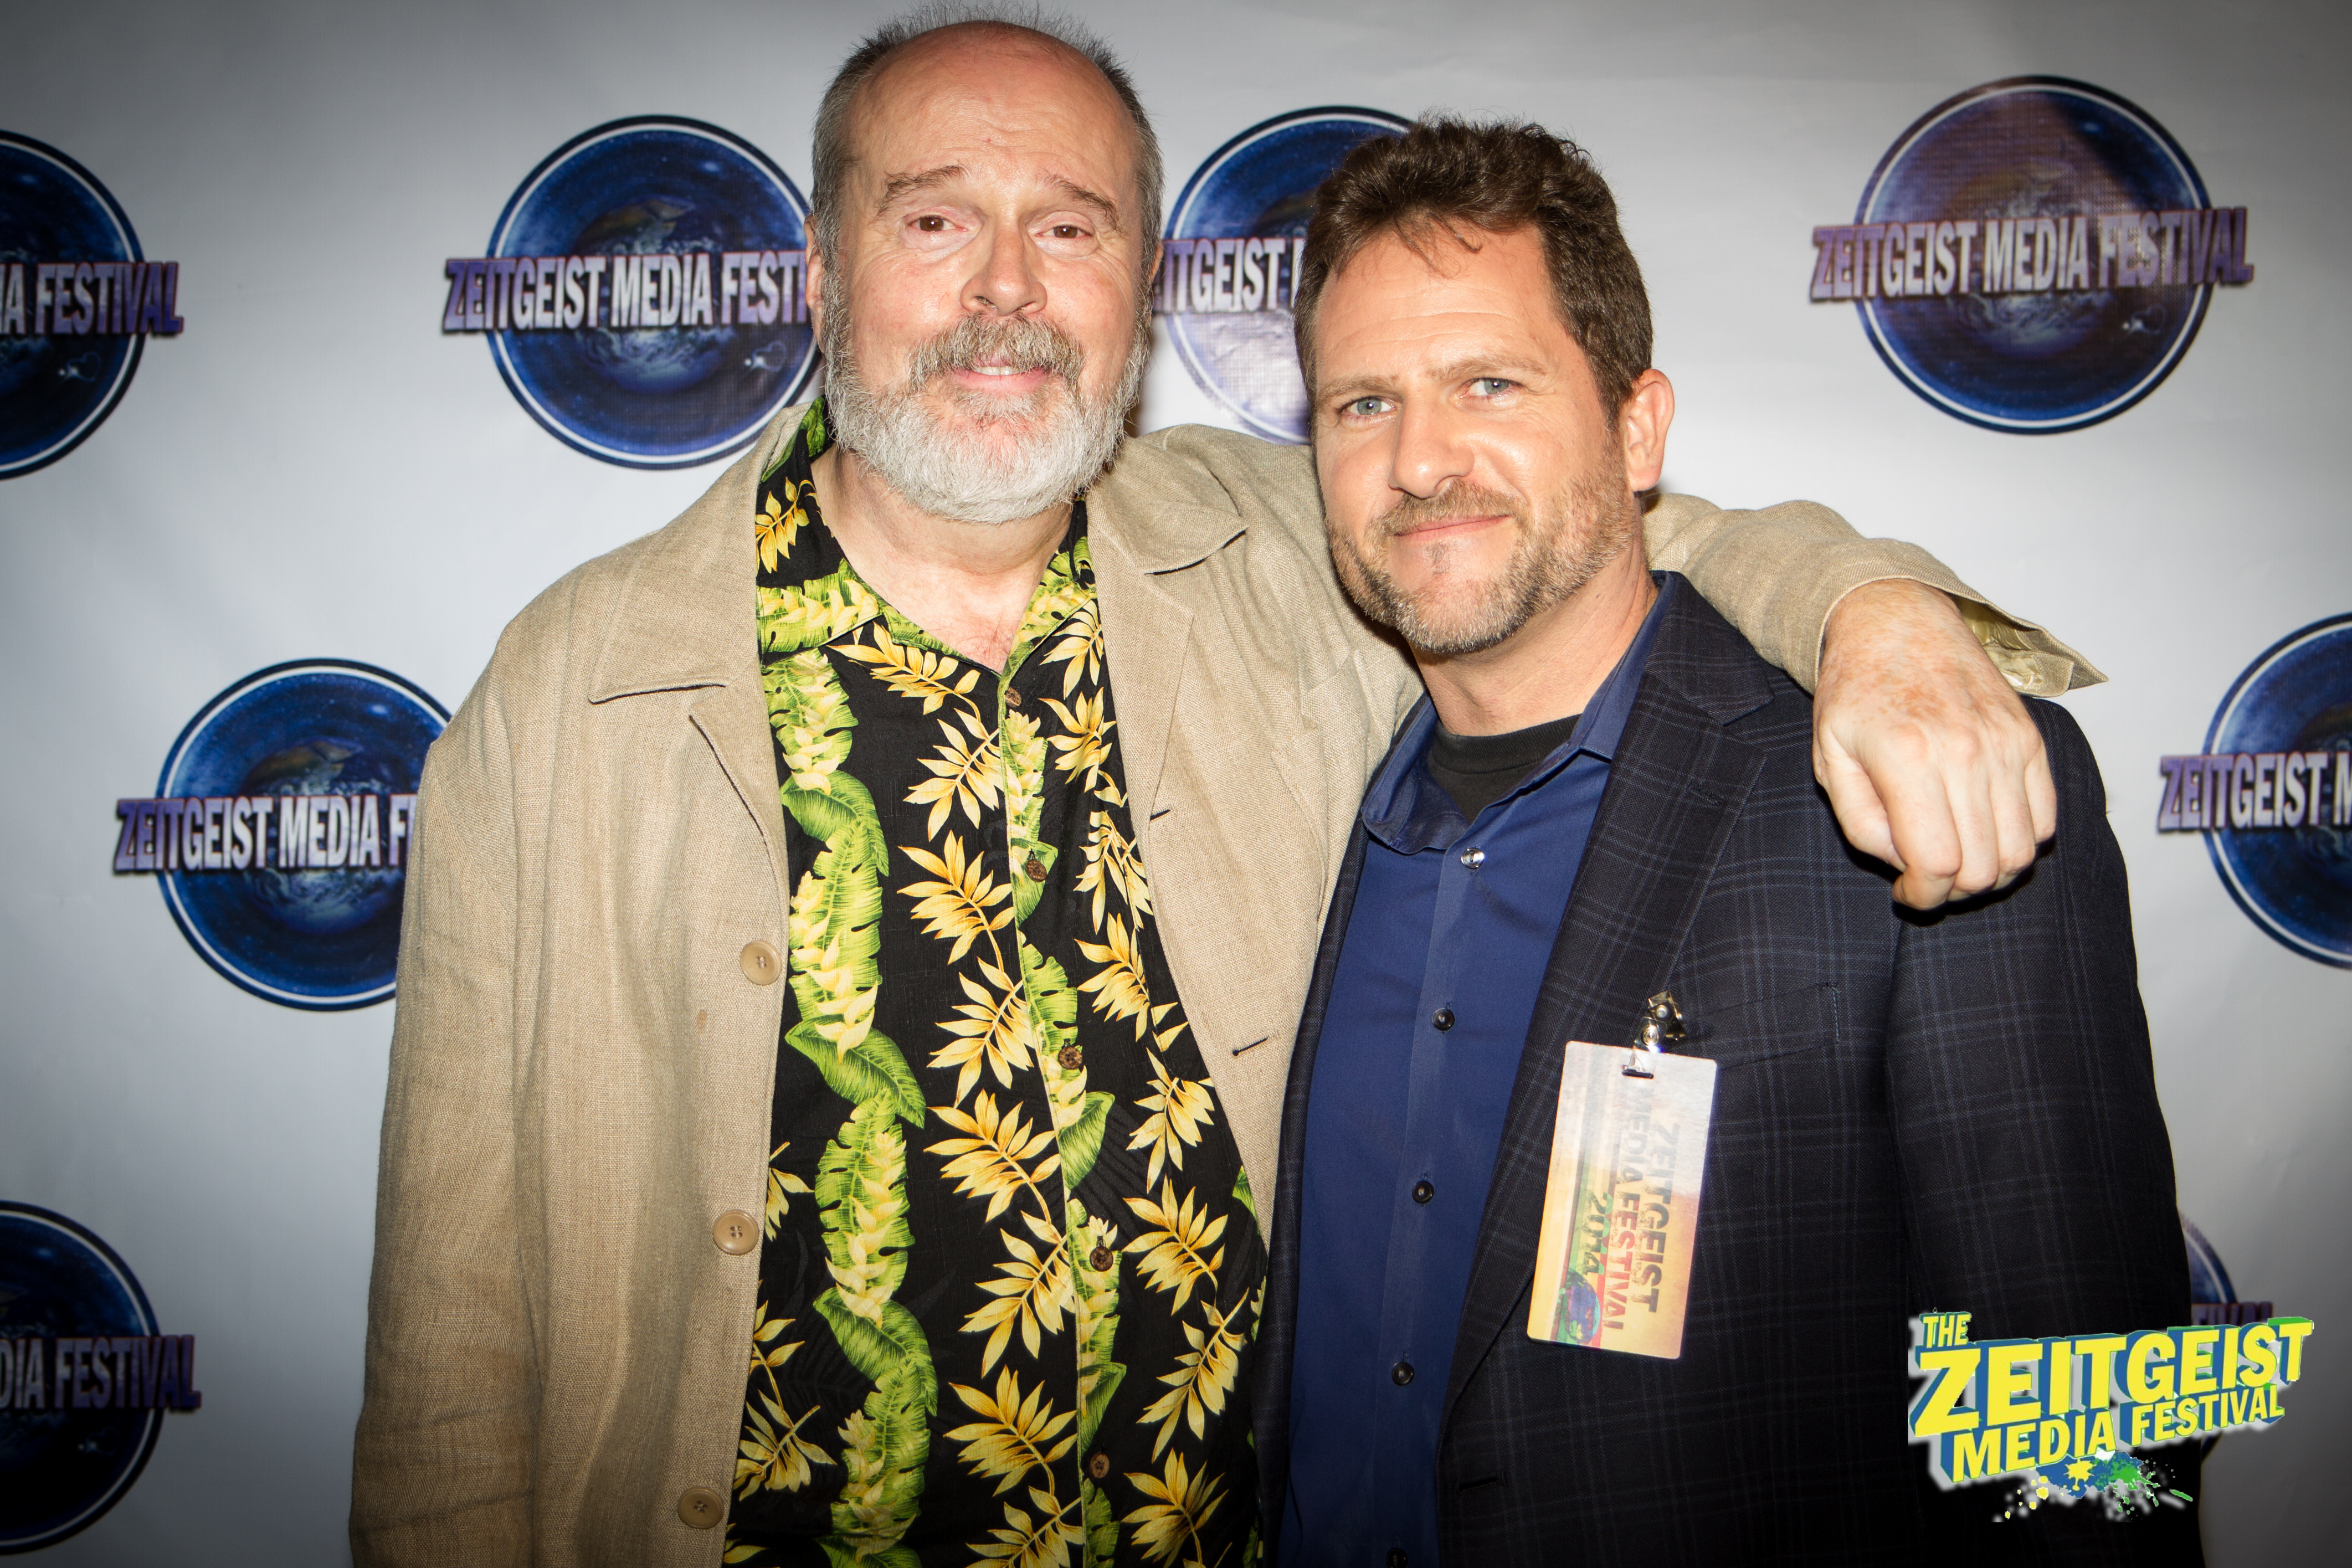 Rick Overton and Dutch Merrick at the Zeitgeist Media Festival 2014